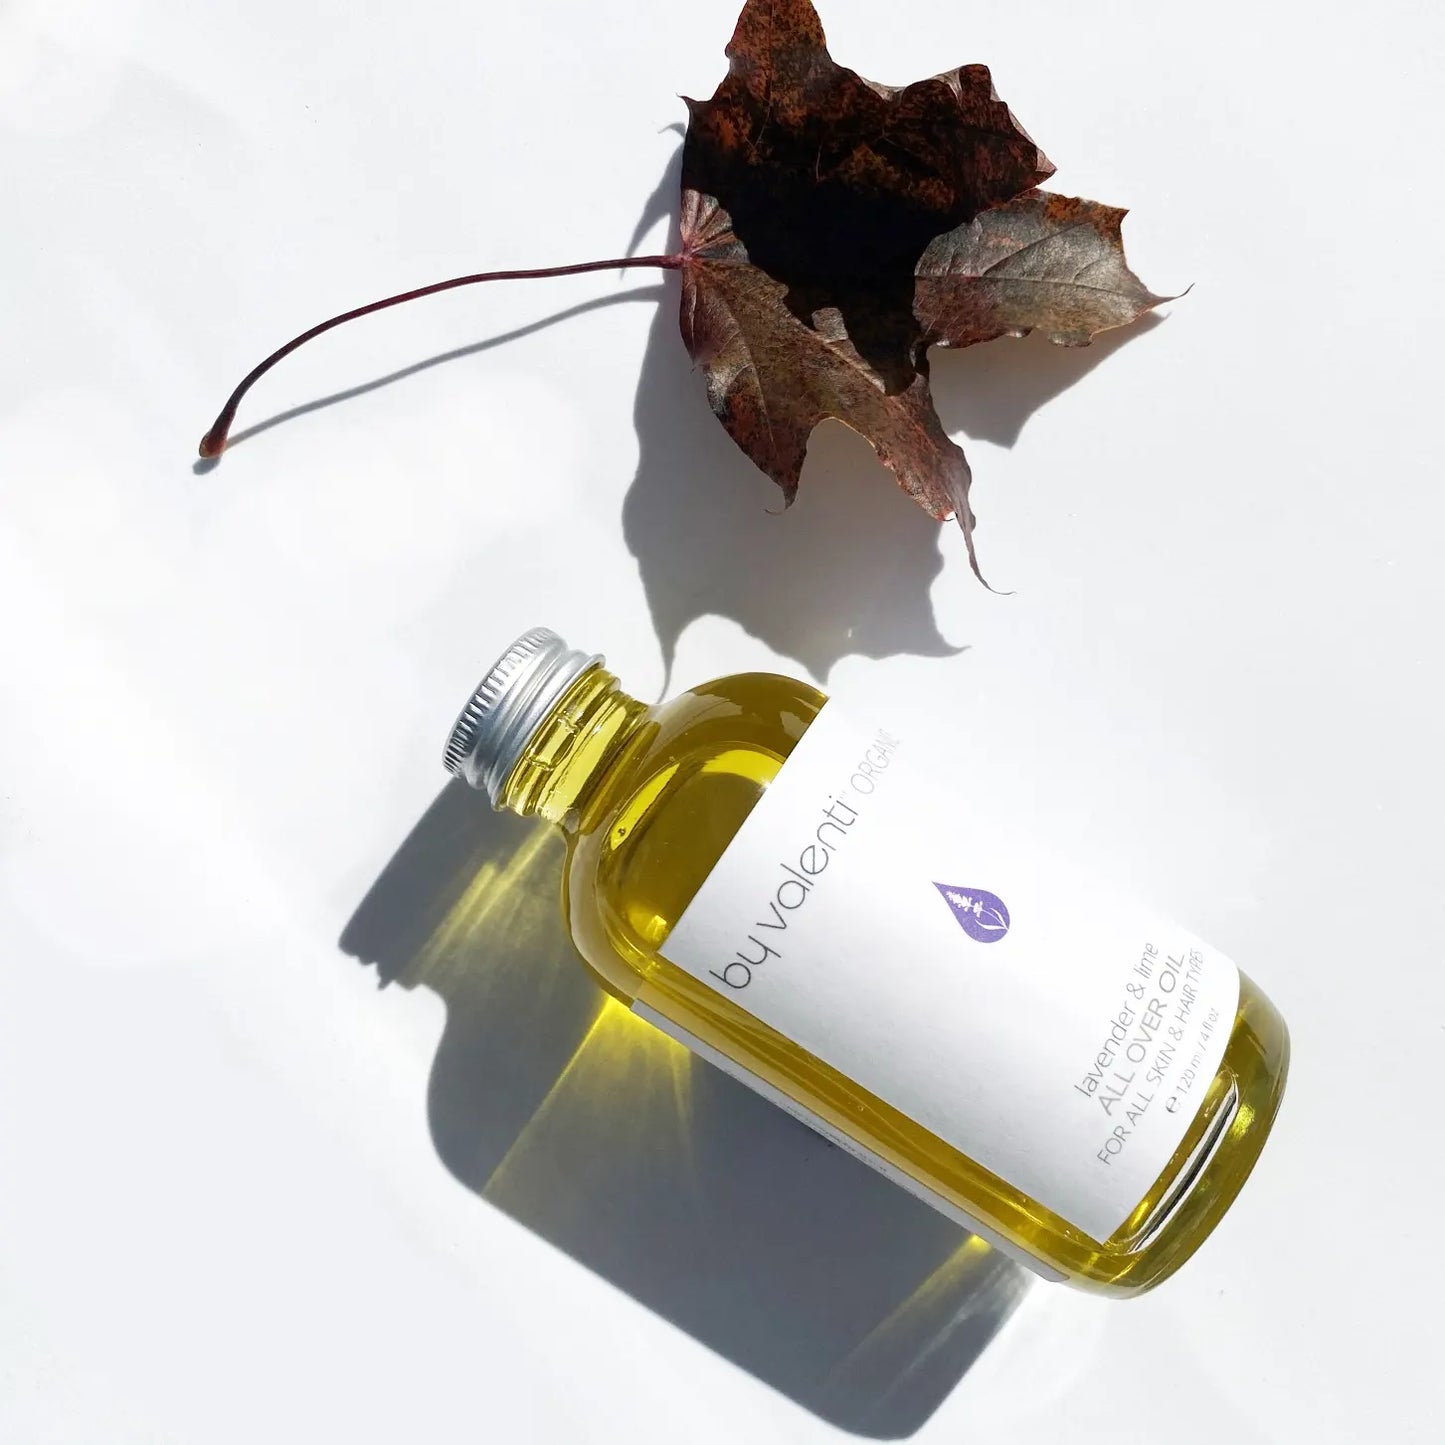 By Valenti Organics Lavender & Lime Body Oil for Healthier, Happier Skin